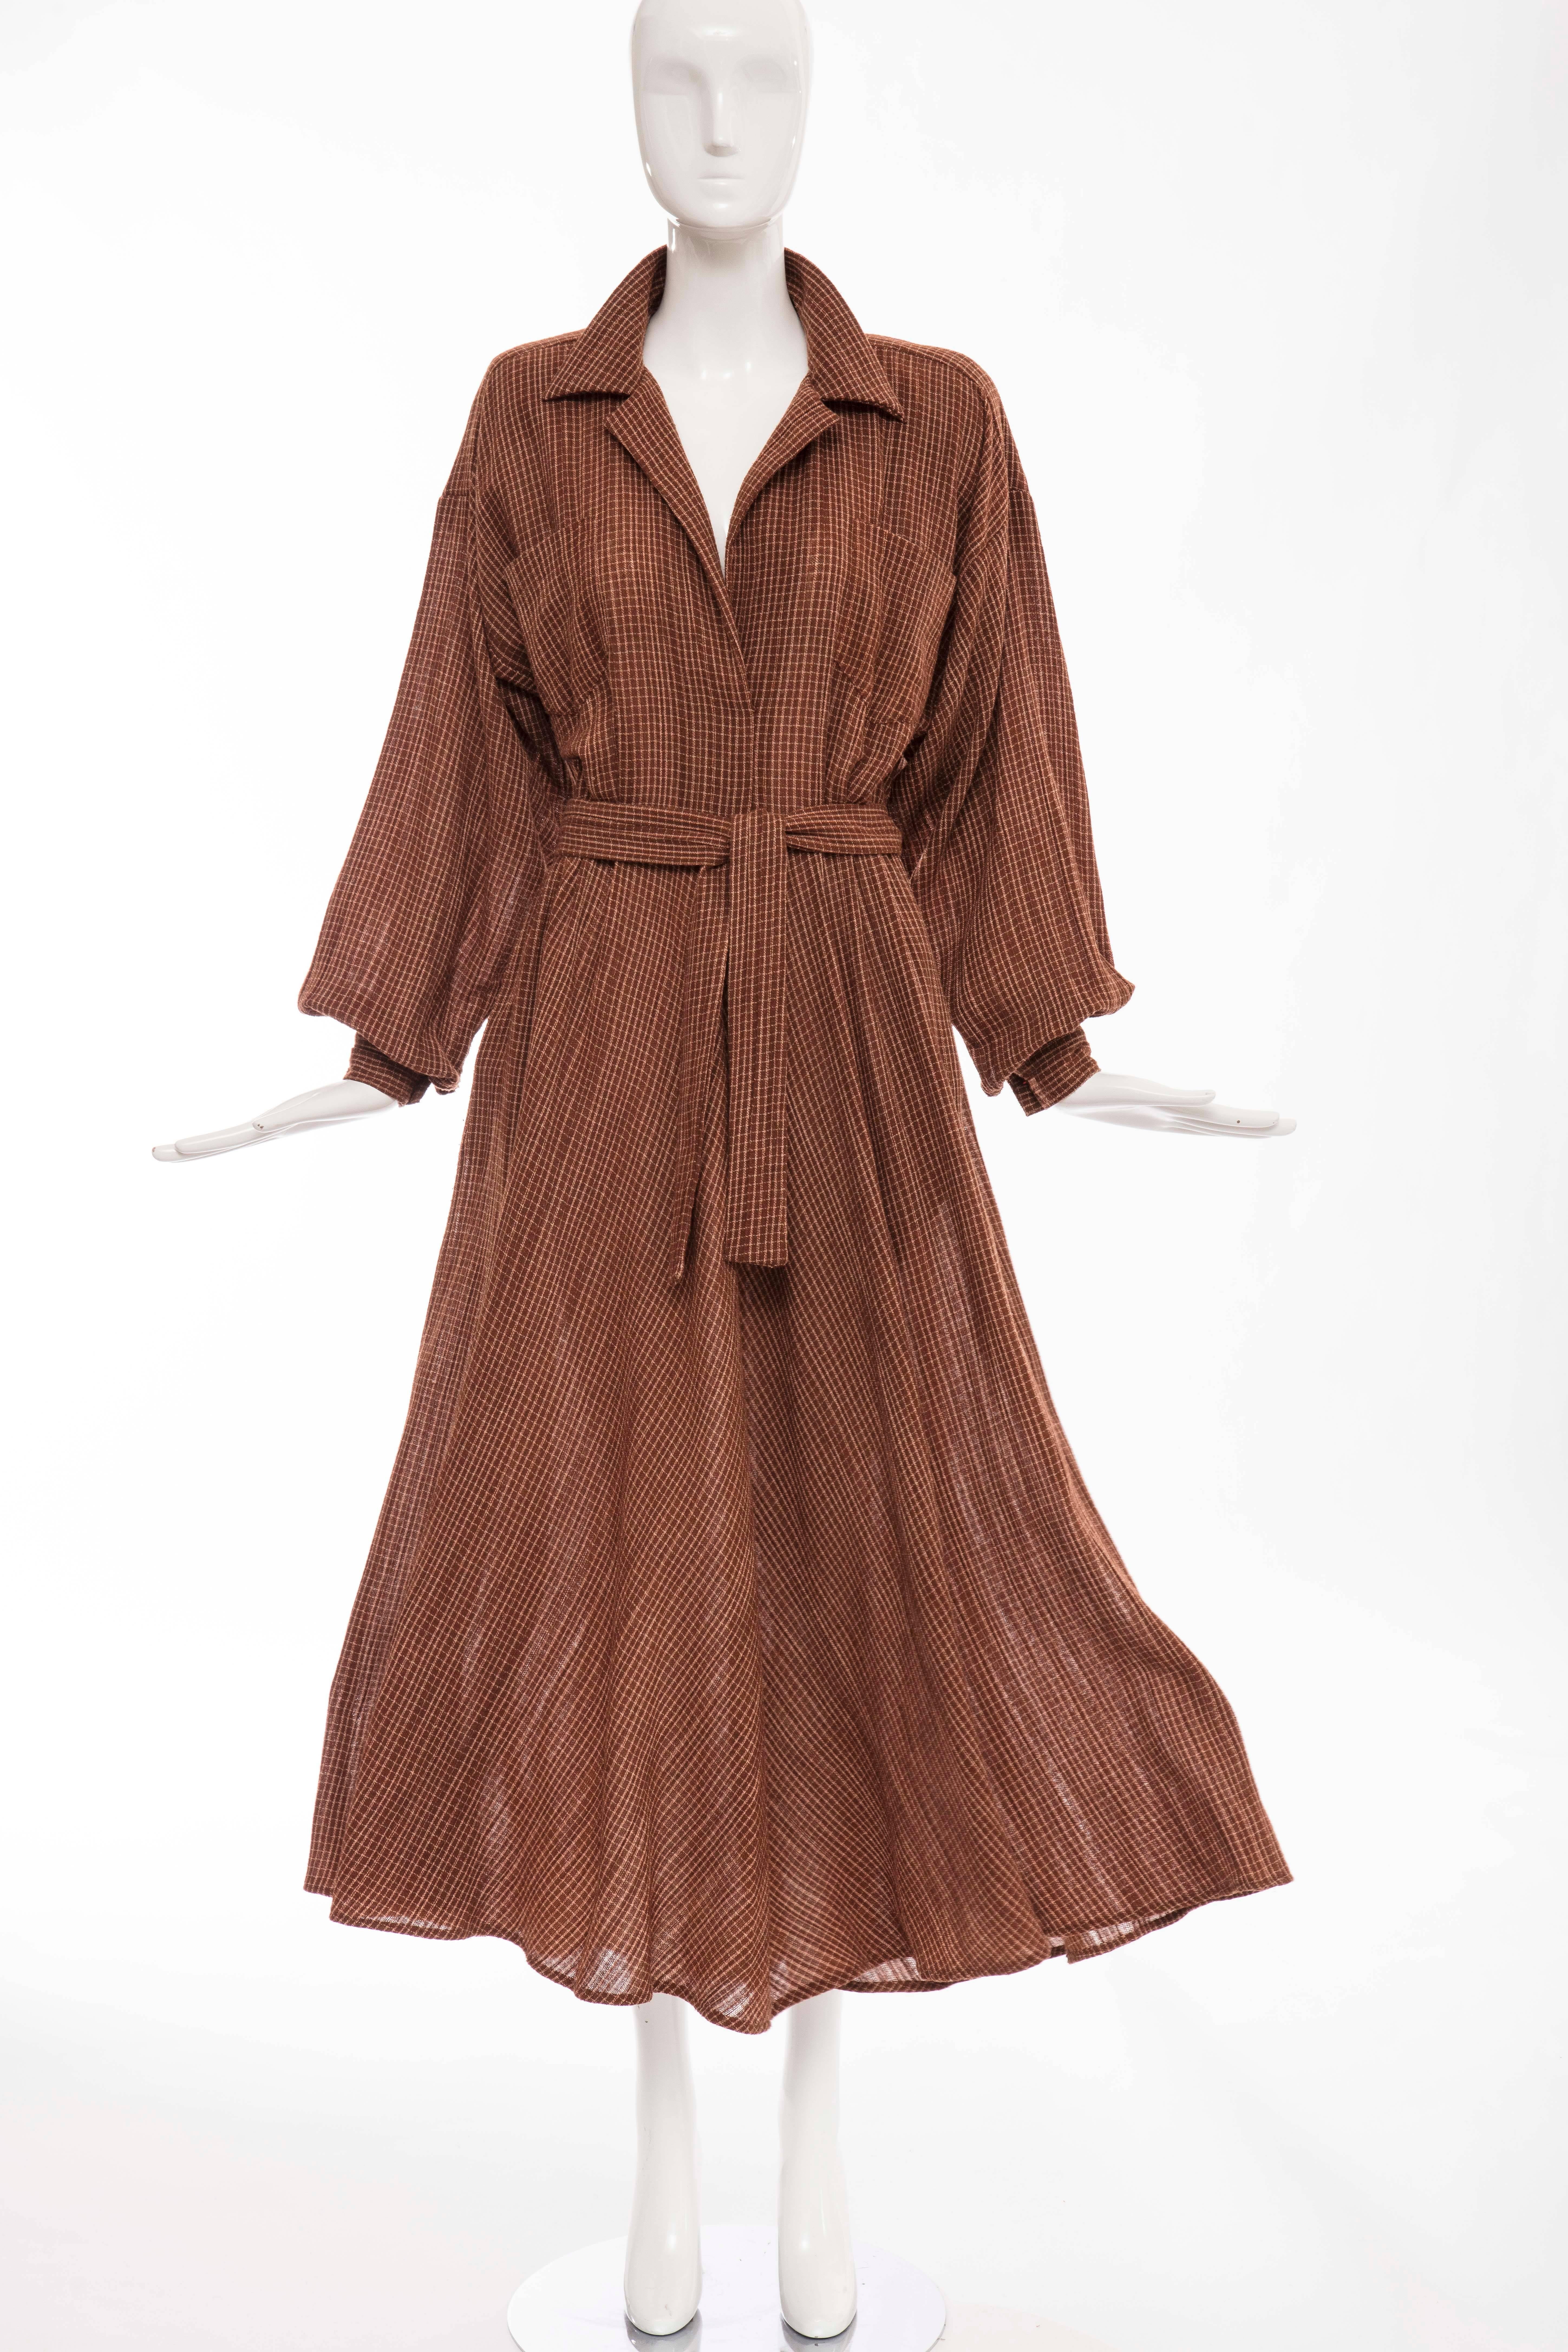 Norma Kamali Terracotta Cotton Gauze Windowpane Check Dress, Circa 1980's 4